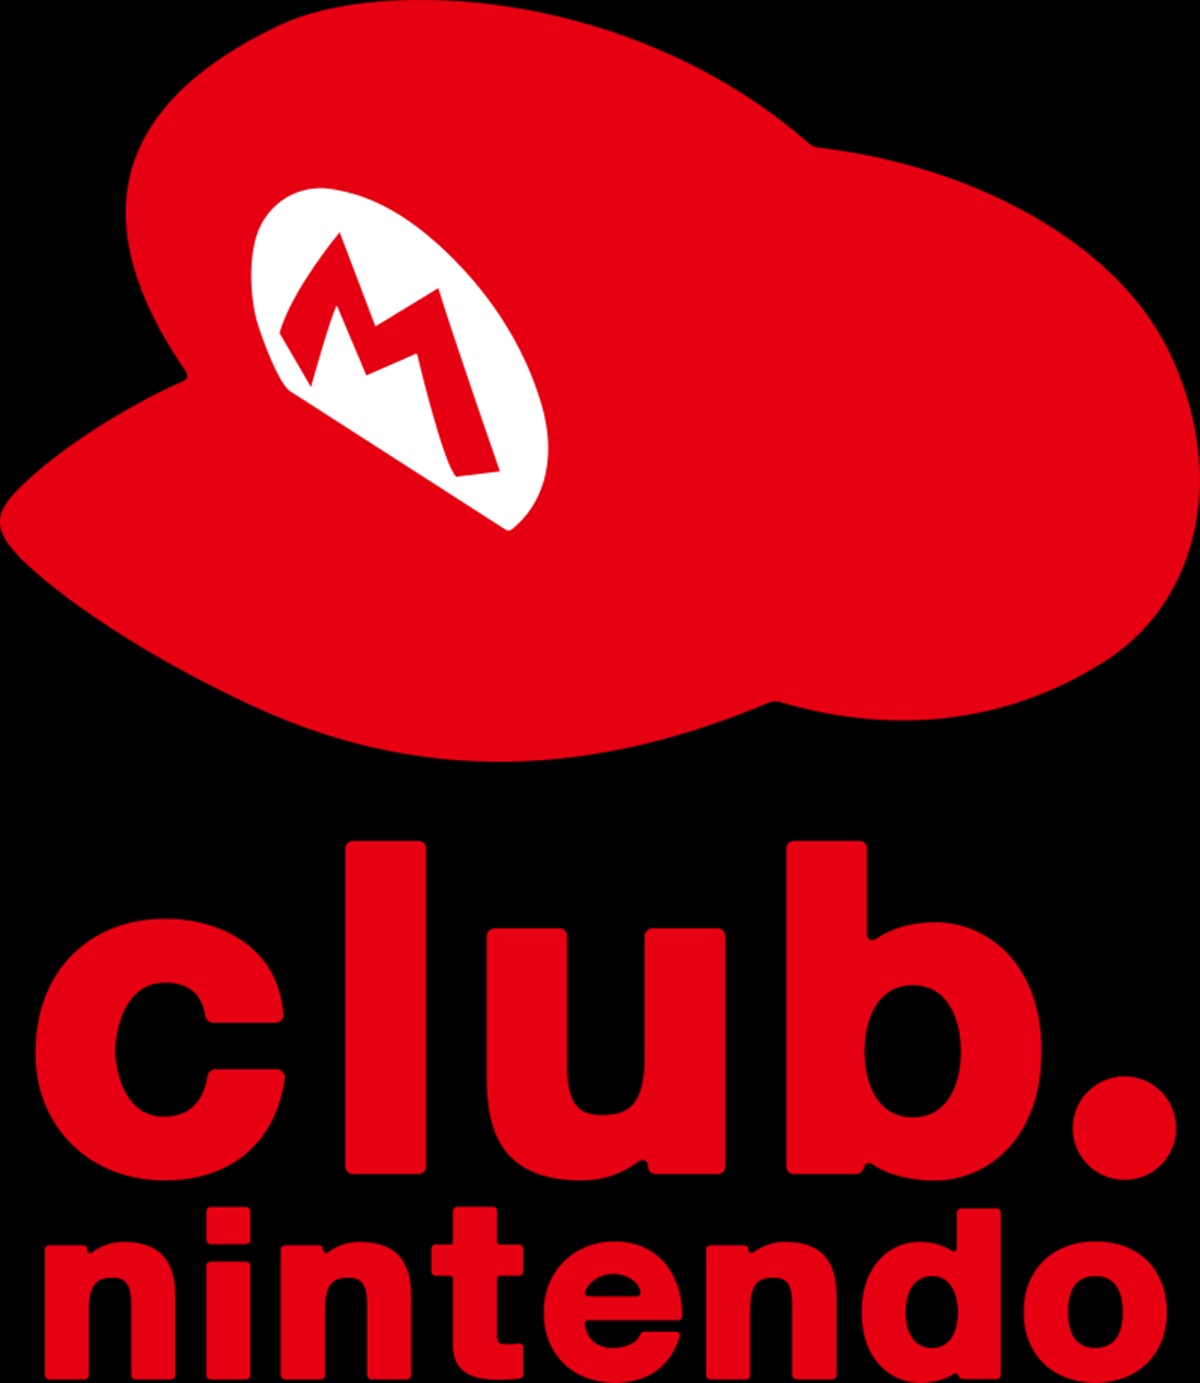 What Happened To Club Nintendo?